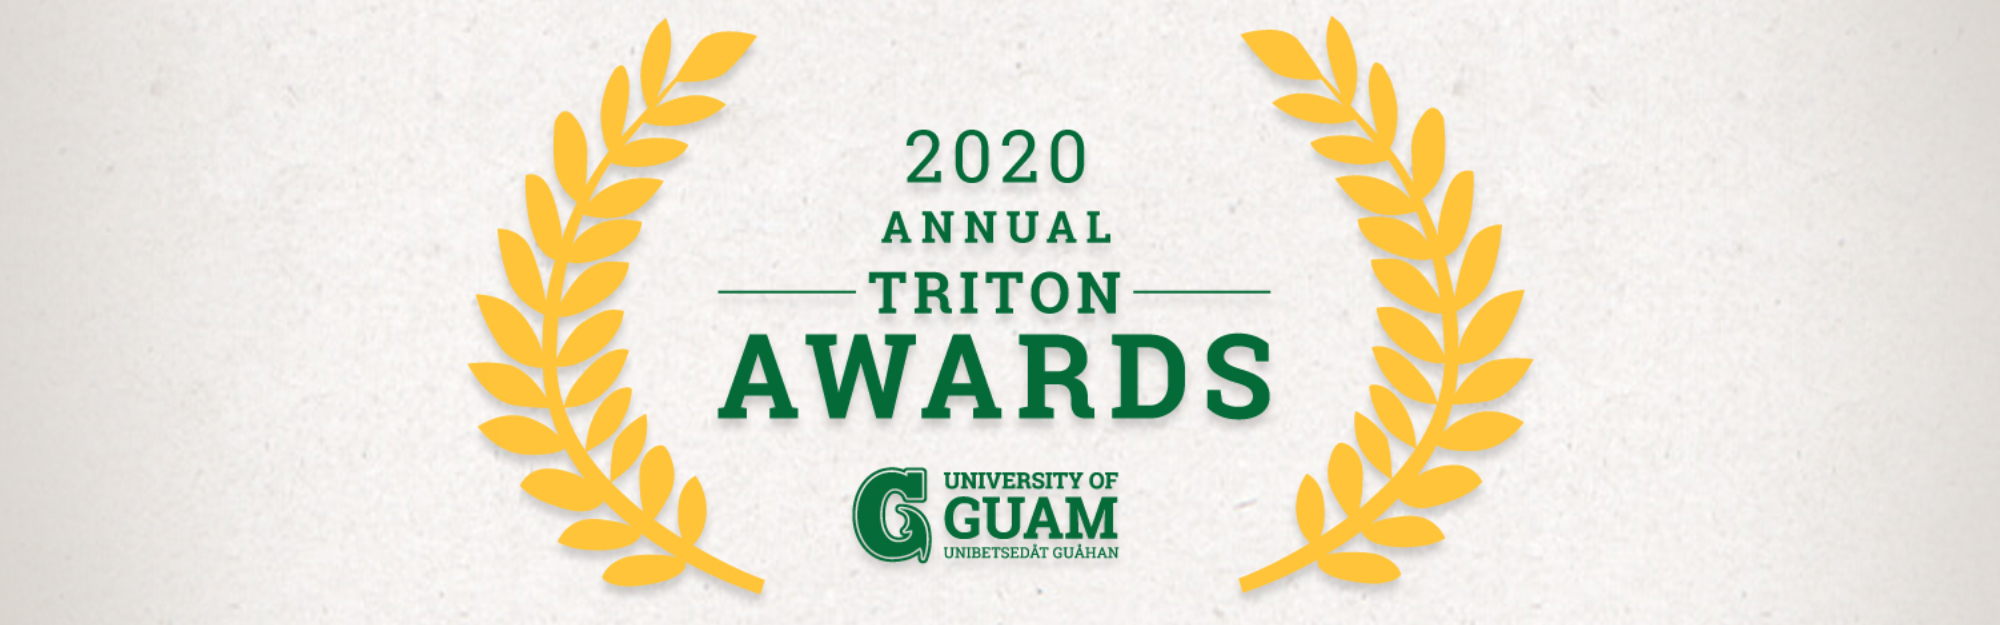 Triton Awards Program 2020